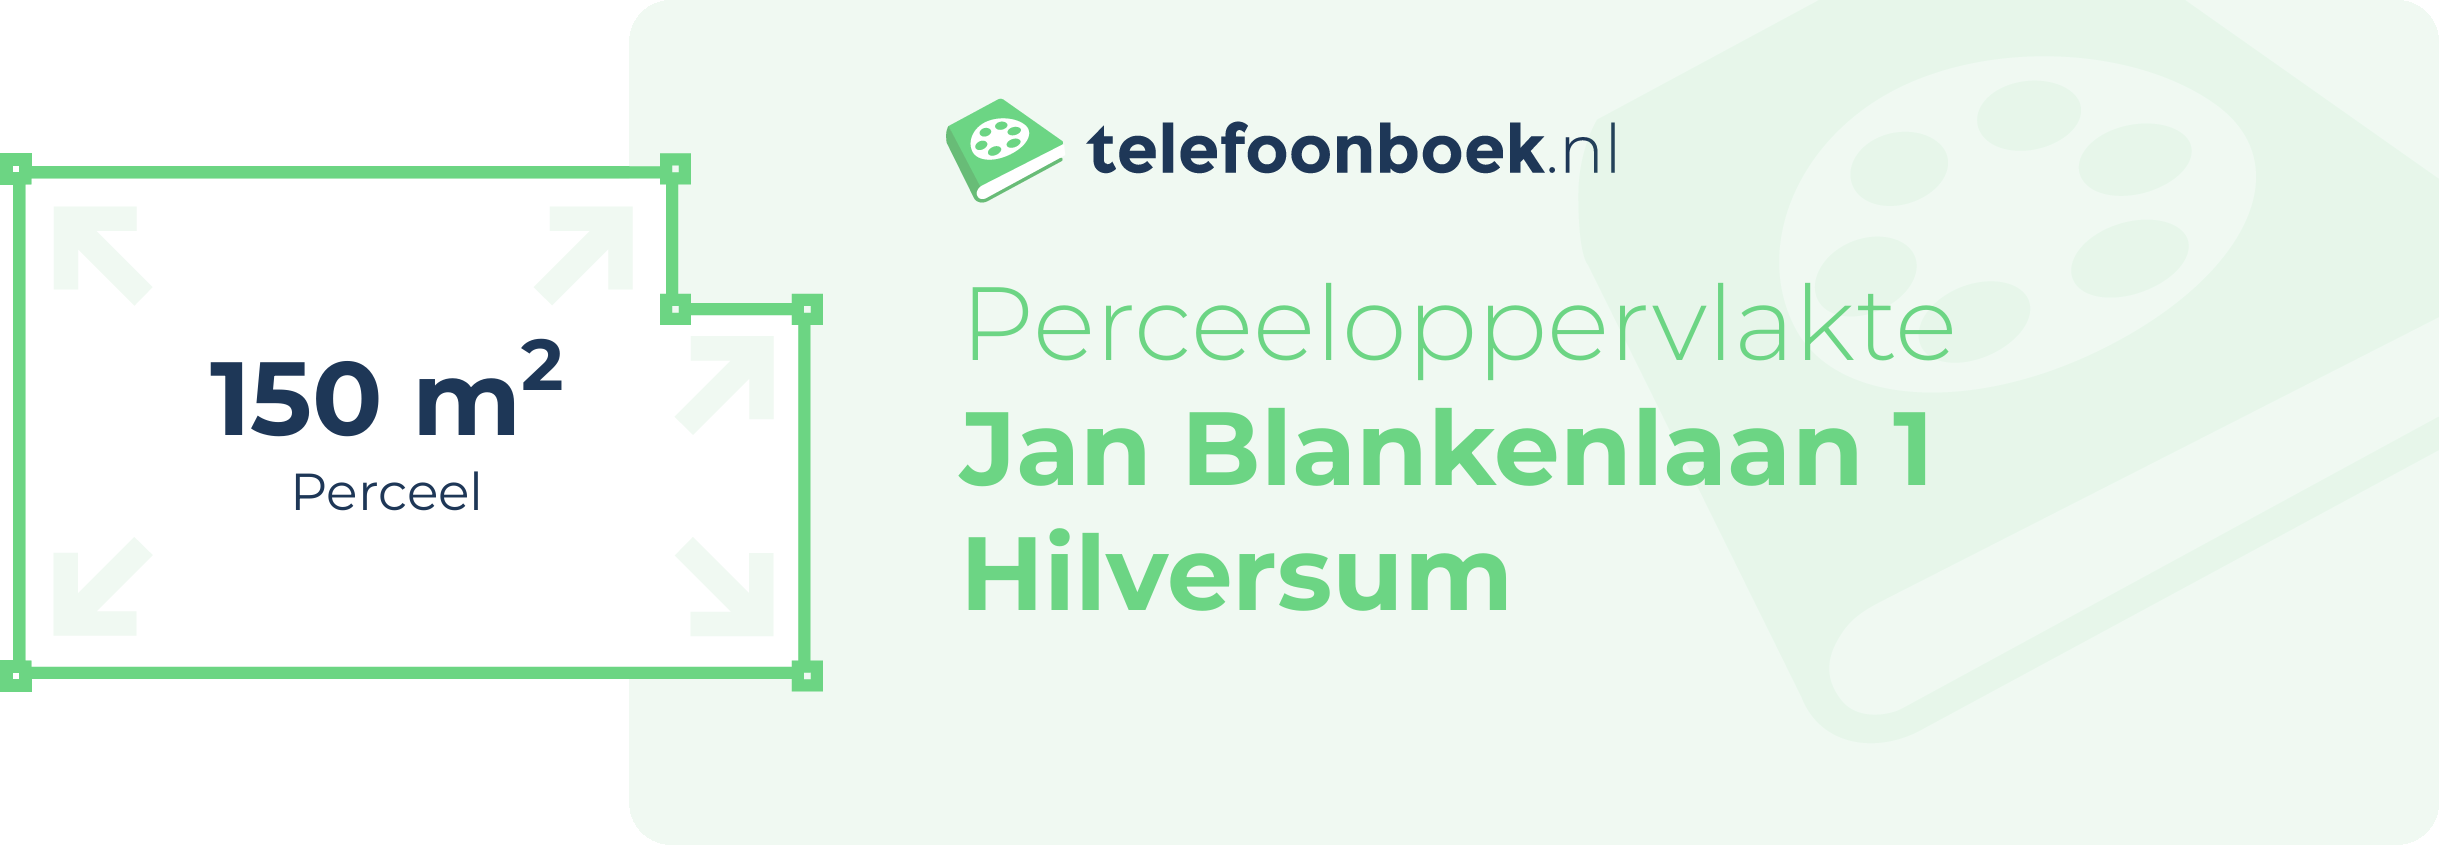 Perceeloppervlakte Jan Blankenlaan 1 Hilversum